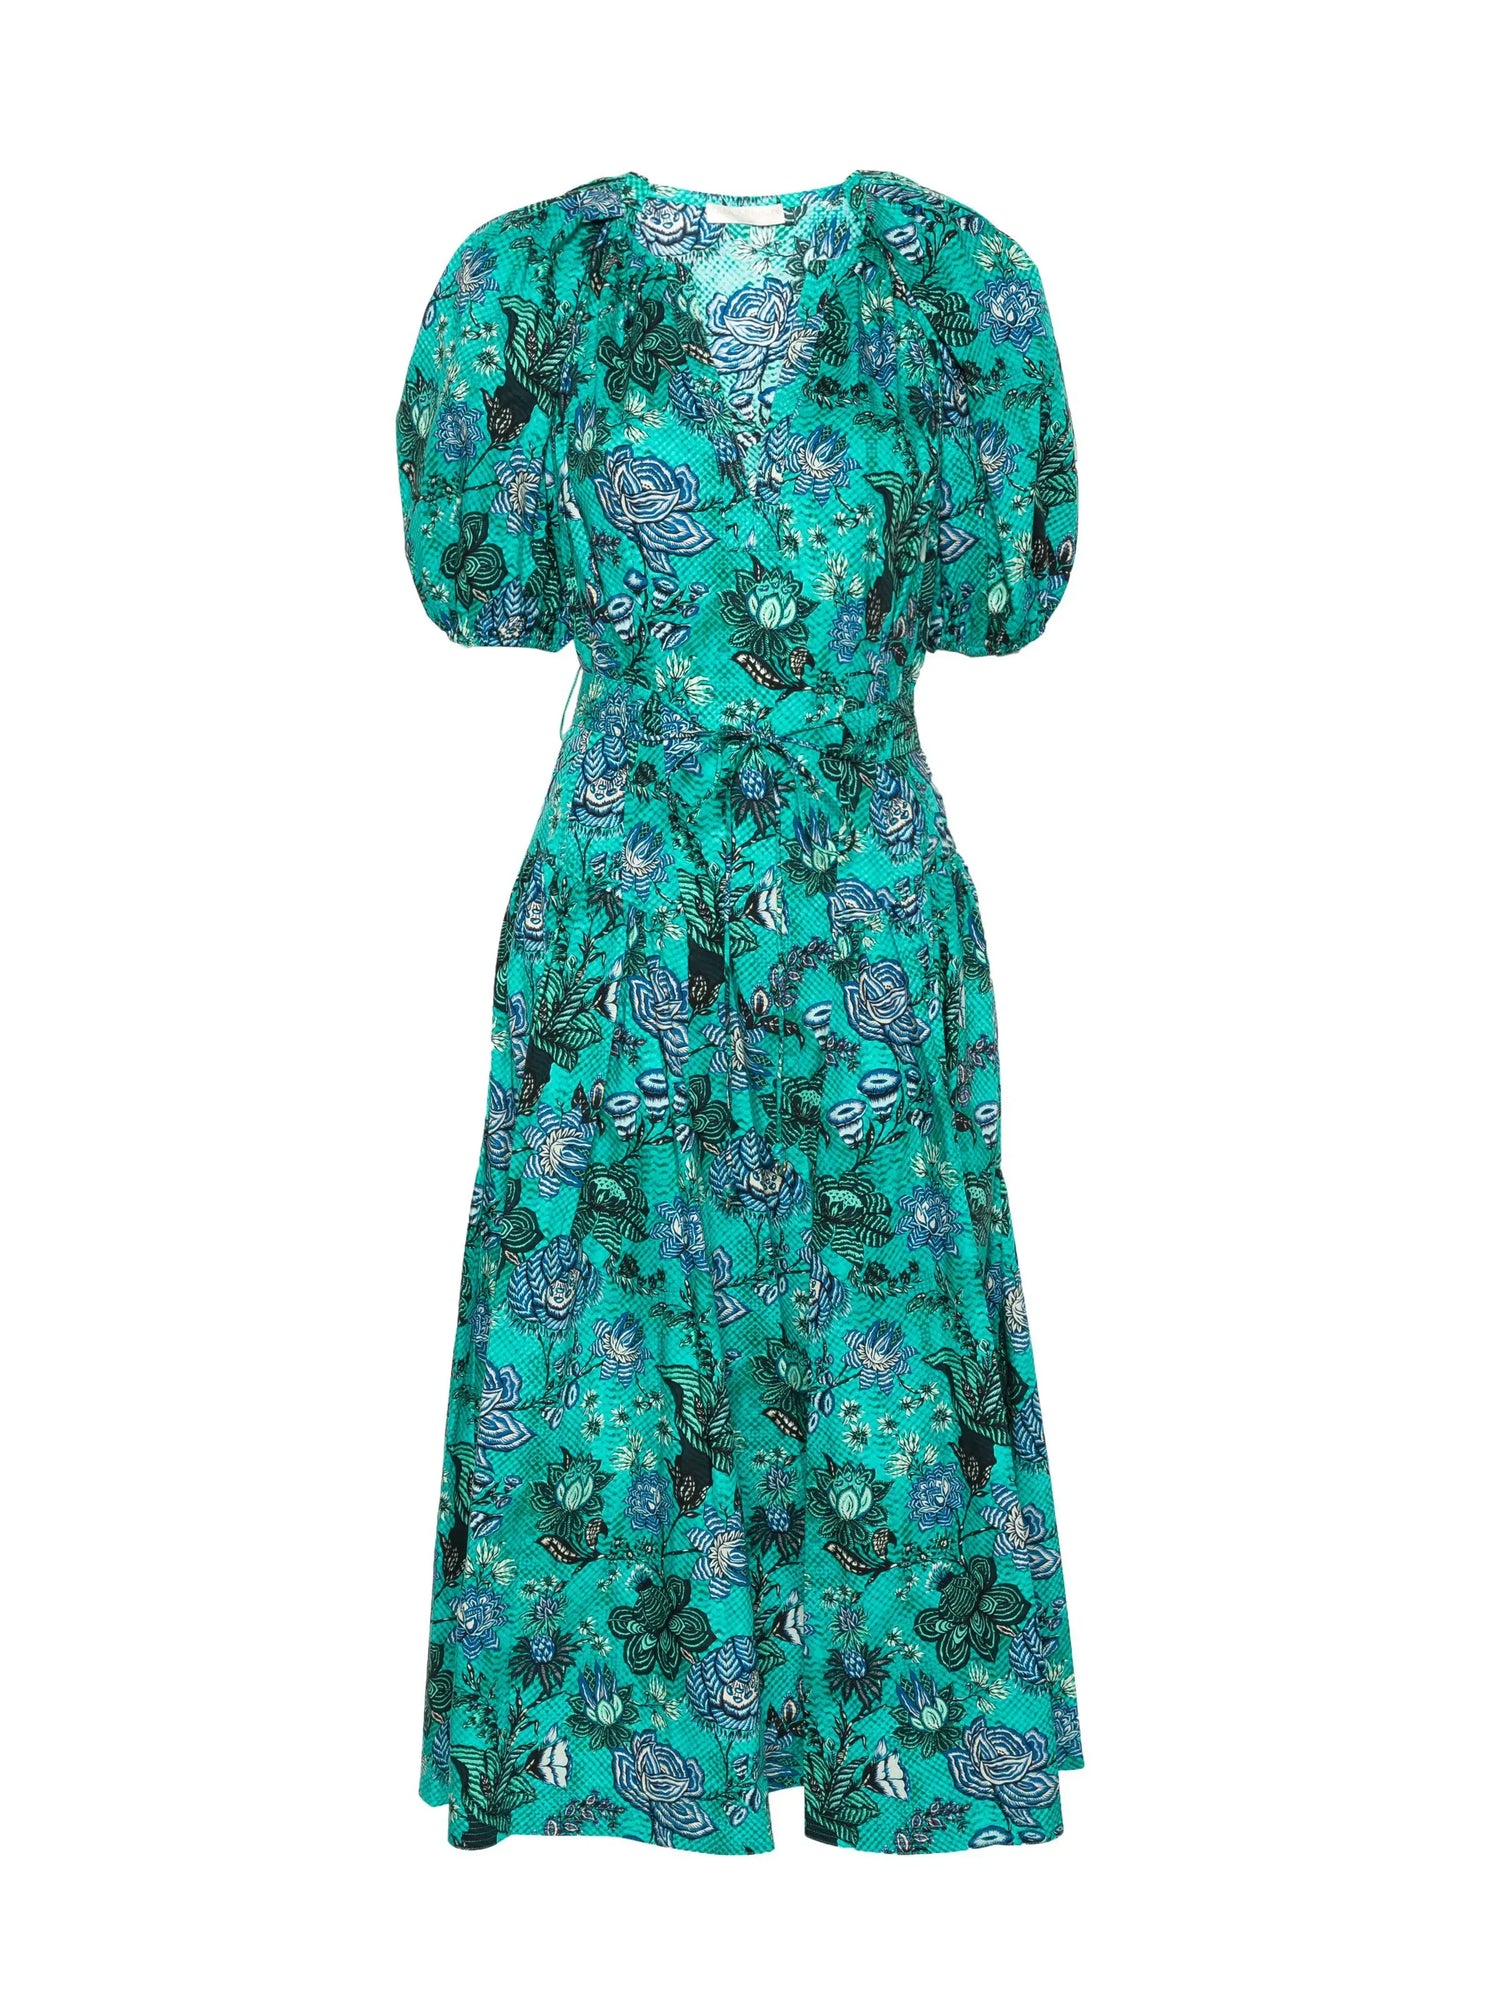 Carina dress, jade